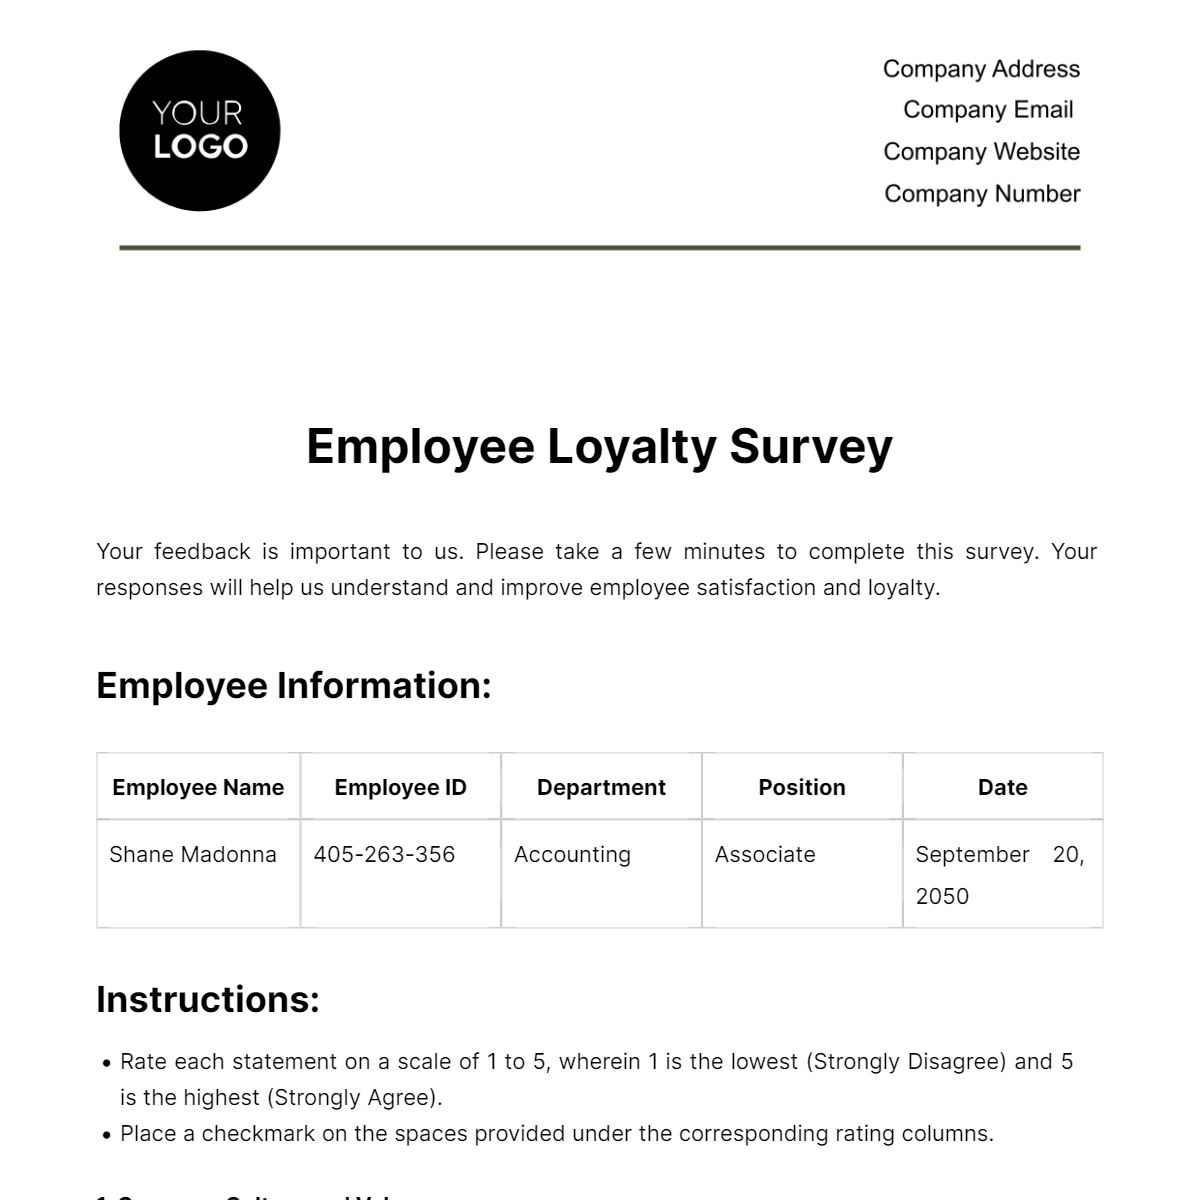 Employee Loyalty Survey HR Template